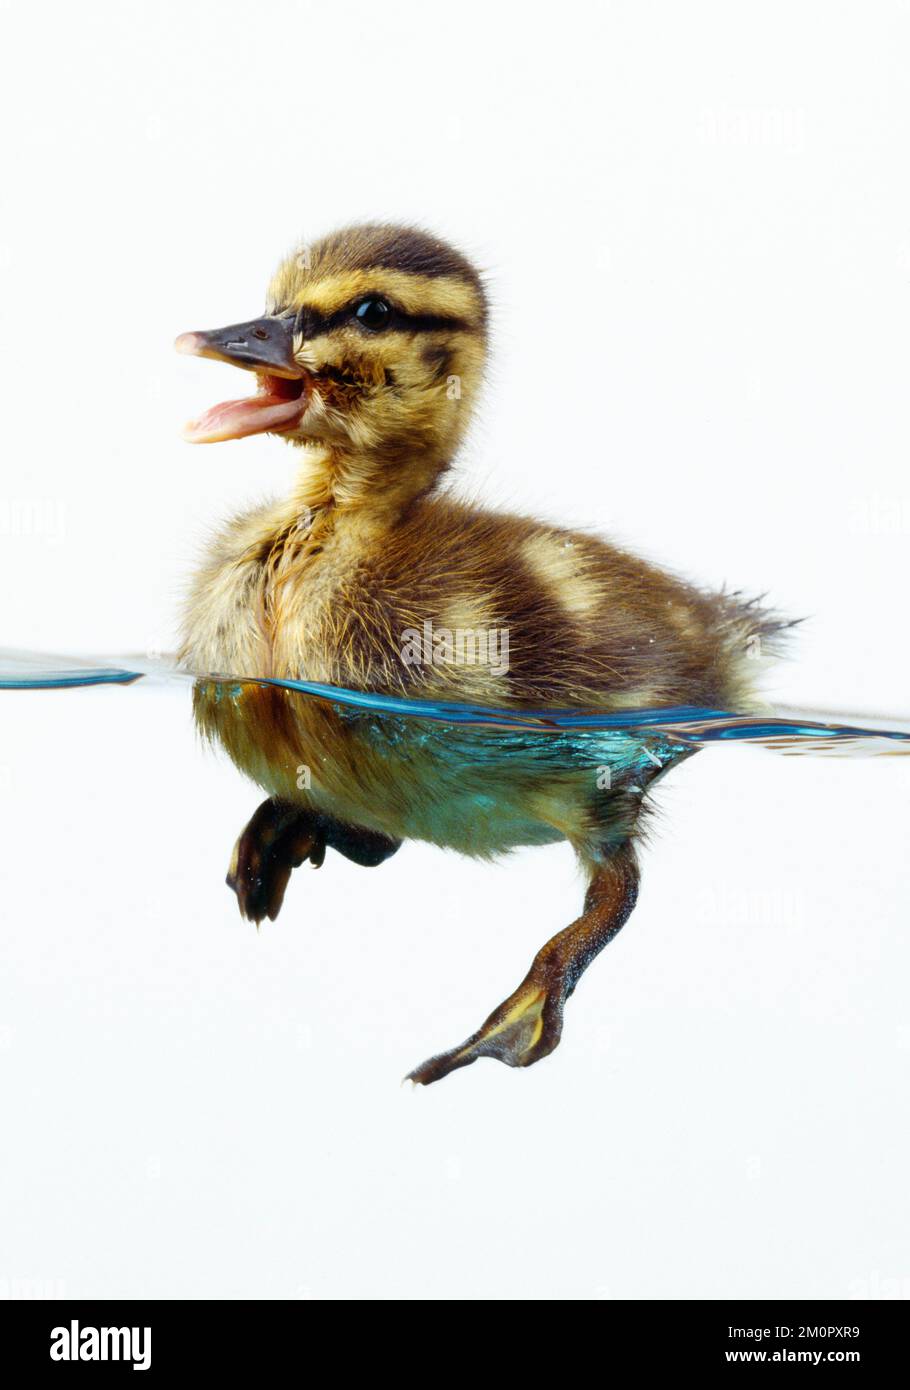 DUCK - Mallard duckling in water Stock Photo